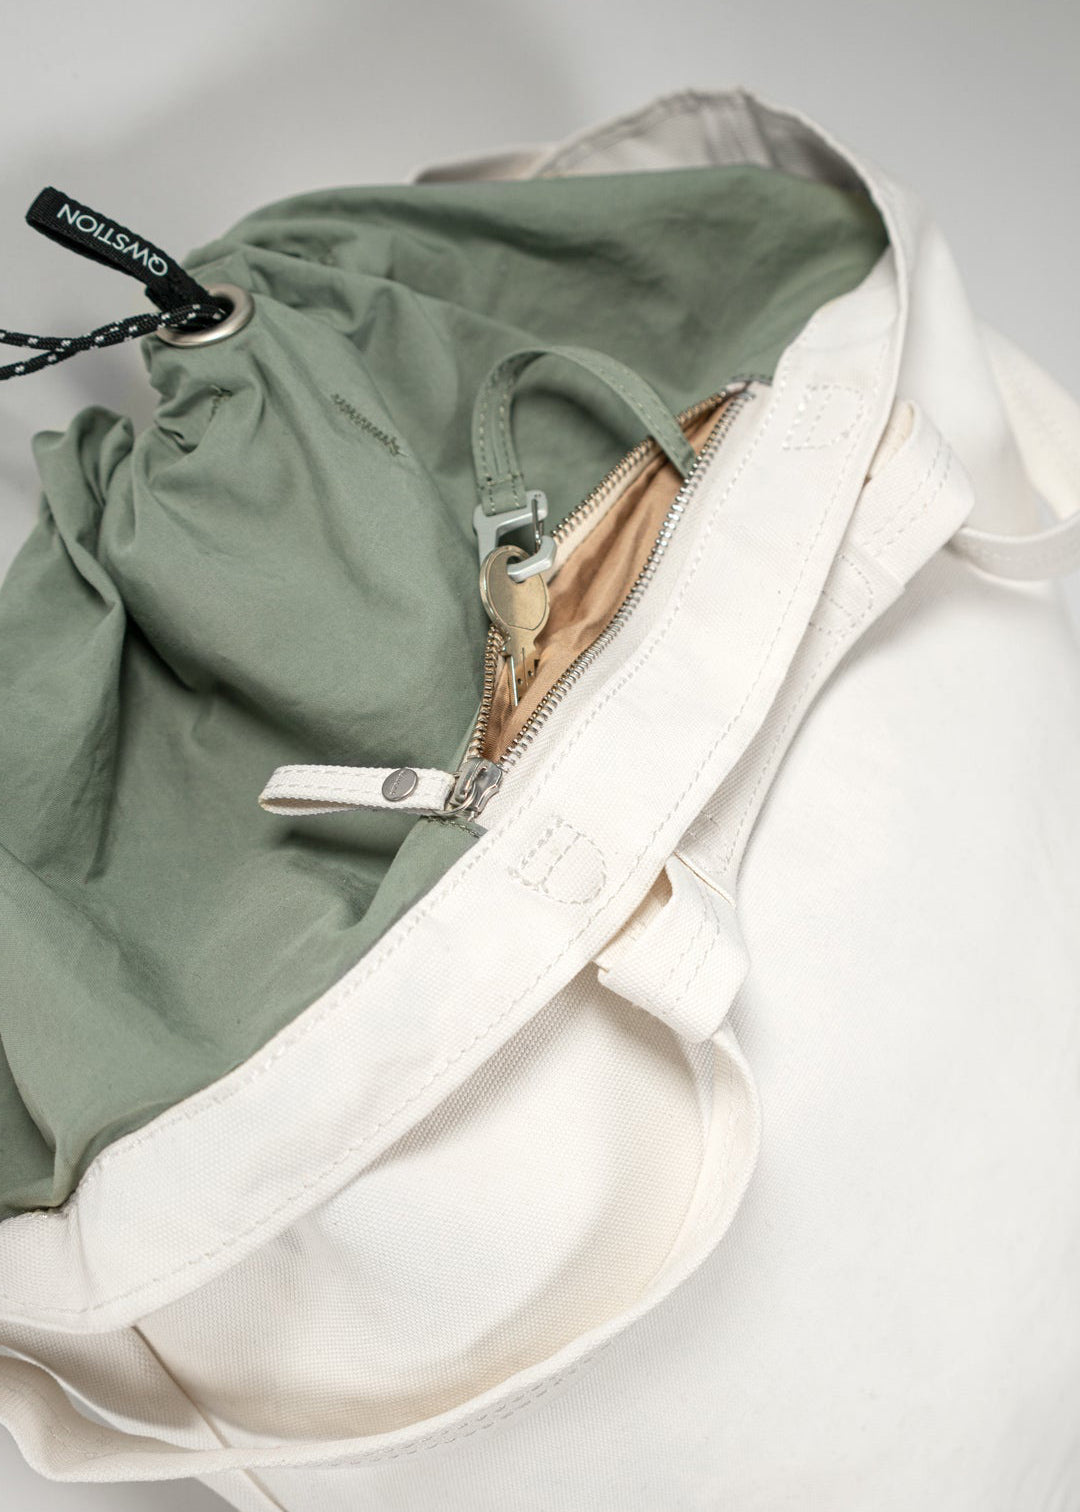 Bananatex Tote Bag Large – Natural White / Heron